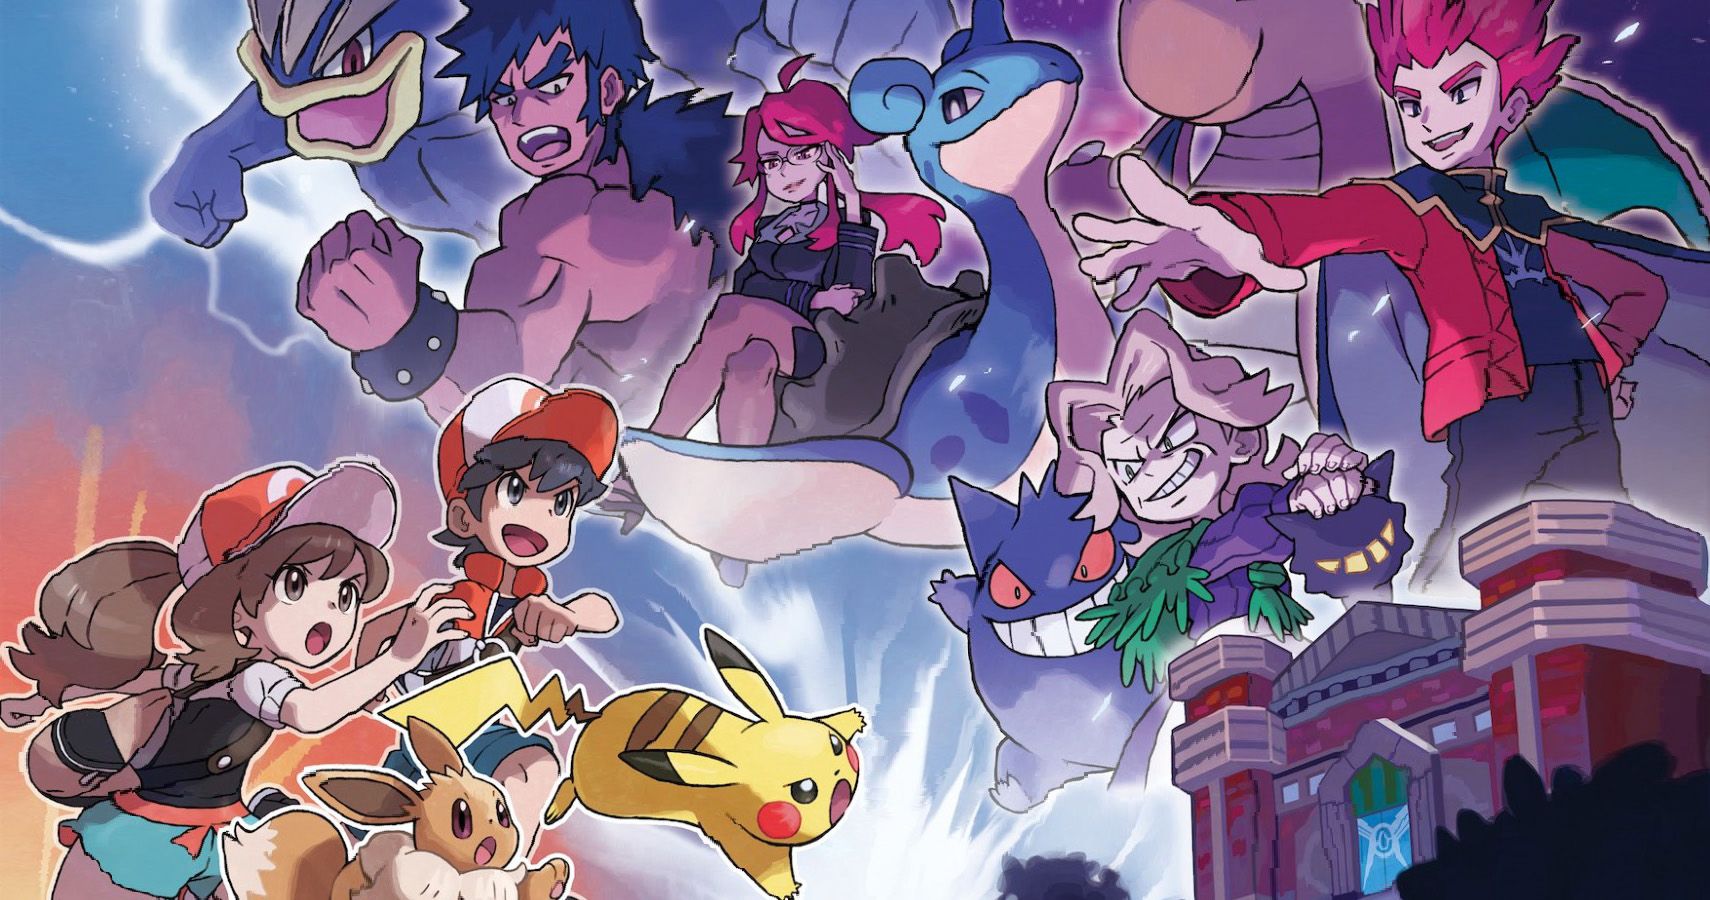 Reliable Nintendo Leaker Says Pokémon News Coming Soon Probably Next Wednesday